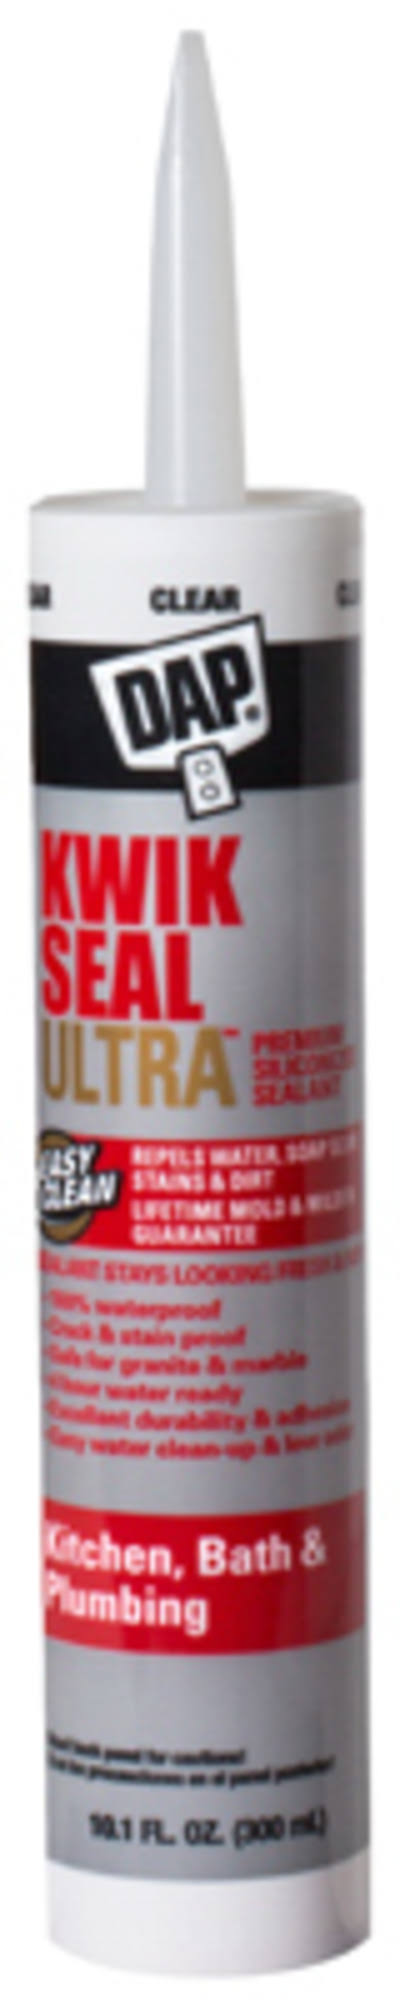 DAP Kwik Seal Ultra Premium Kitchen and Bath Sealant - 10.1oz, Clear